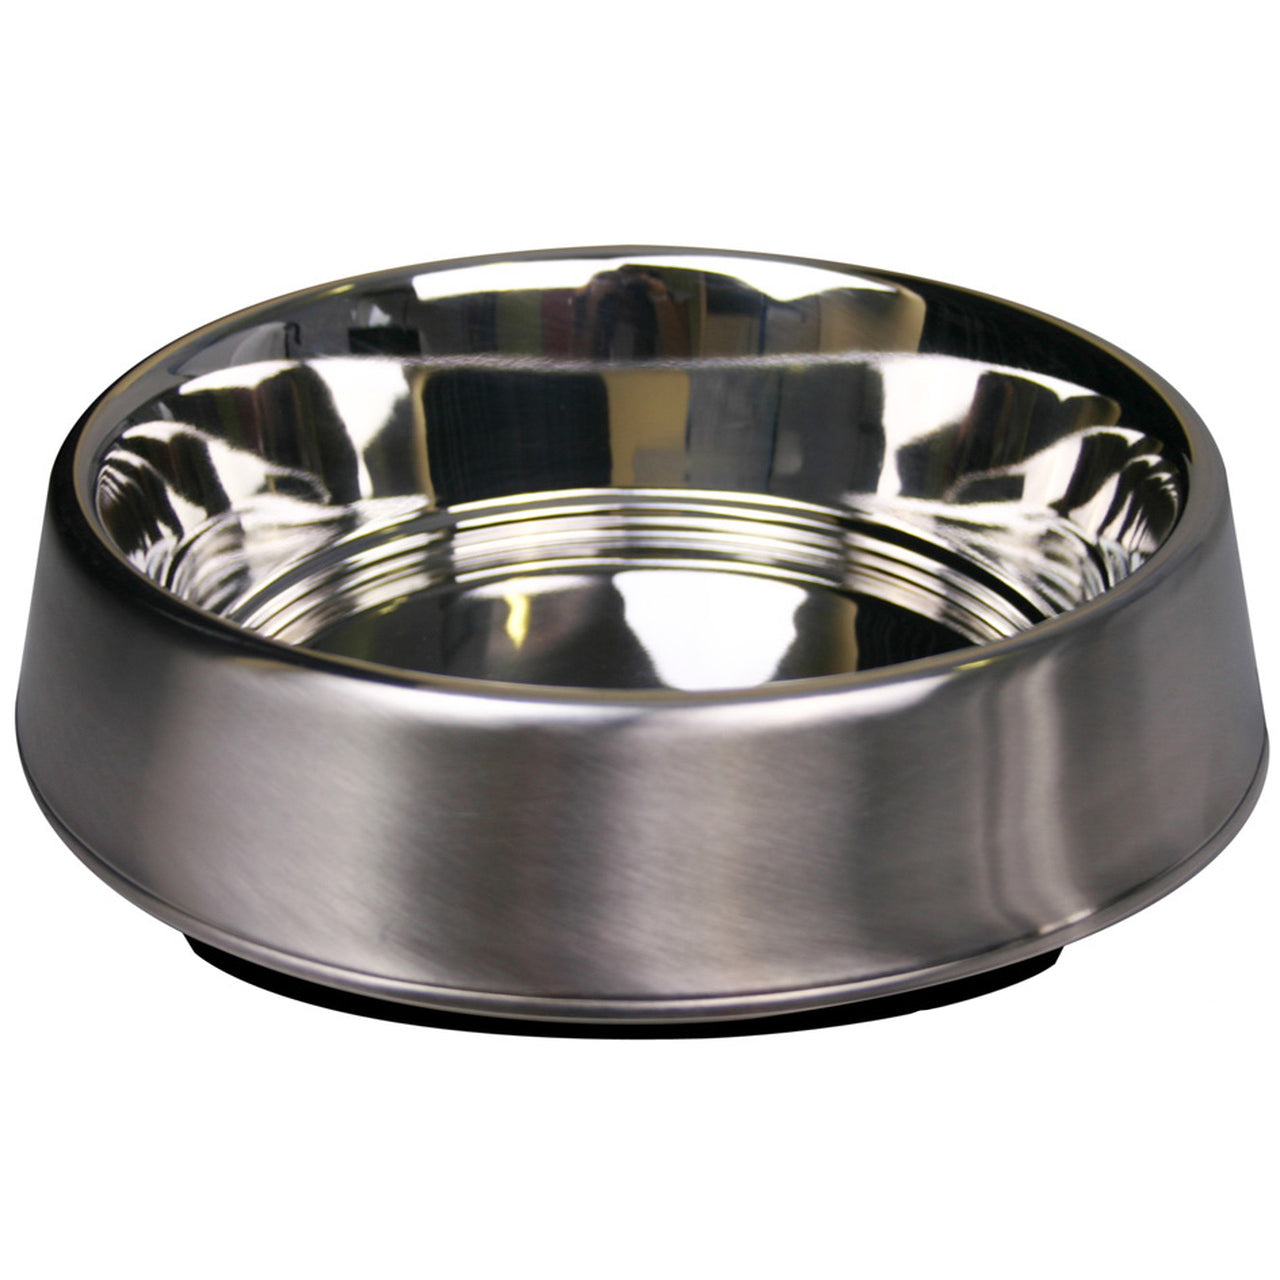 Pet One Anti Tip Stainless Steel Dog Bowl